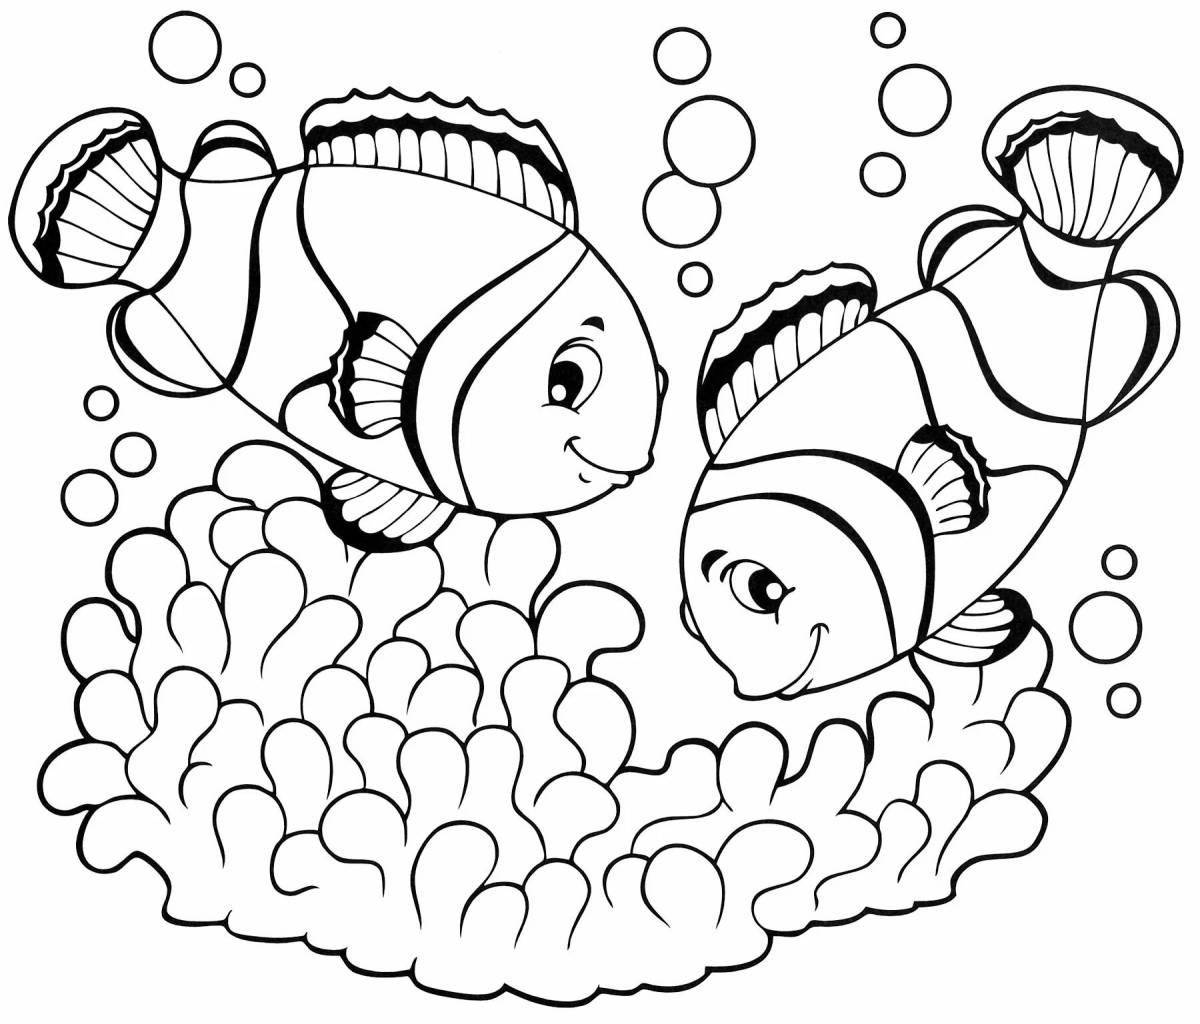 Смелый рисунок рыбы-клоуна